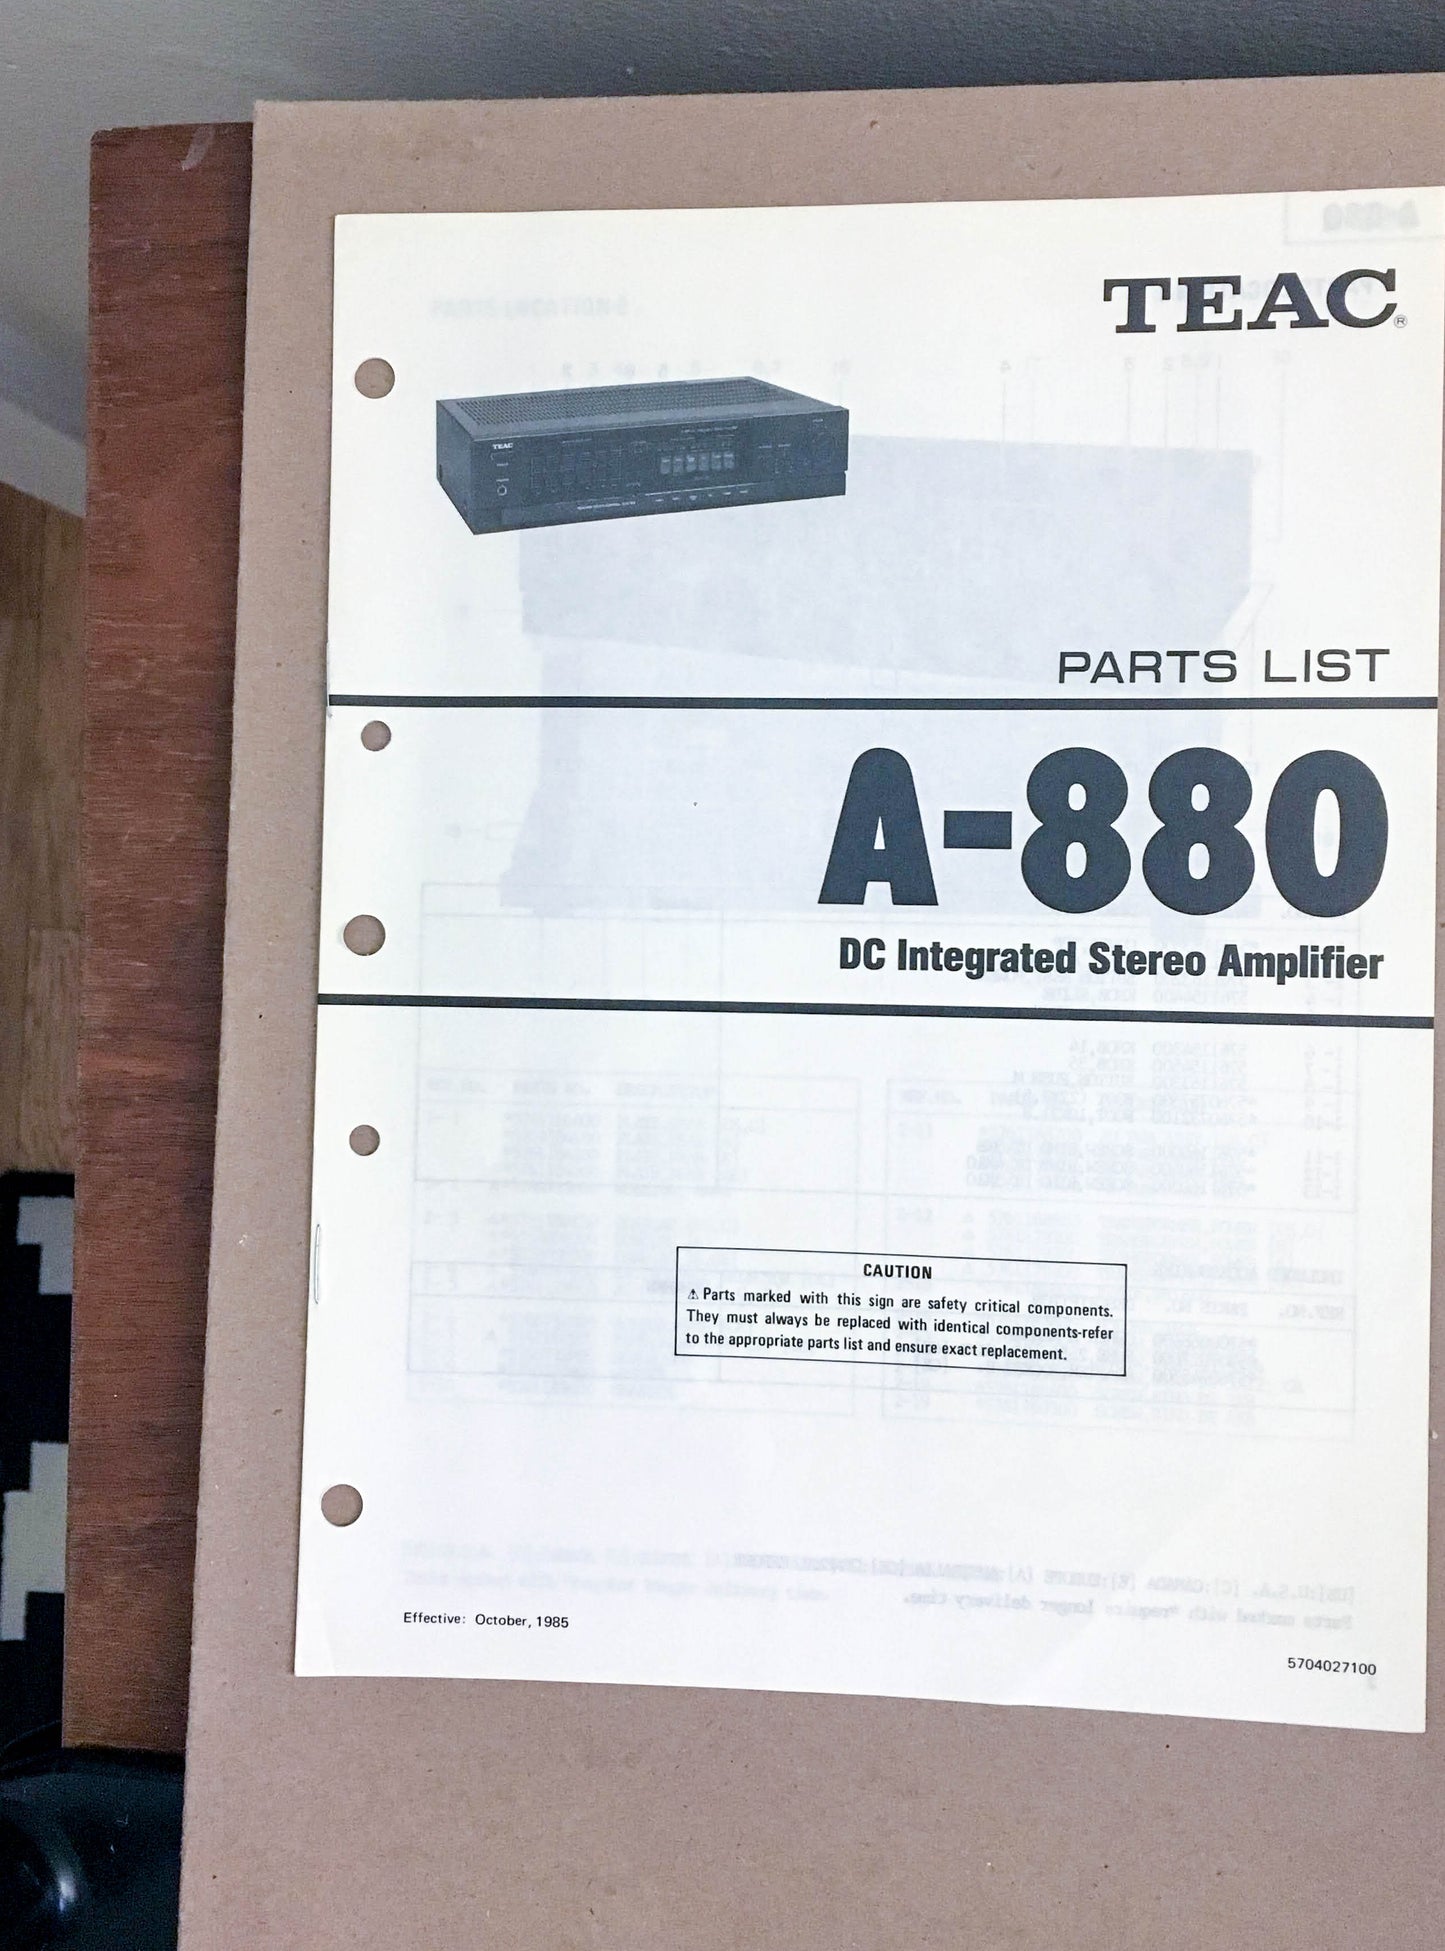 Teac A-880 Amplifier  Parts List *Original*